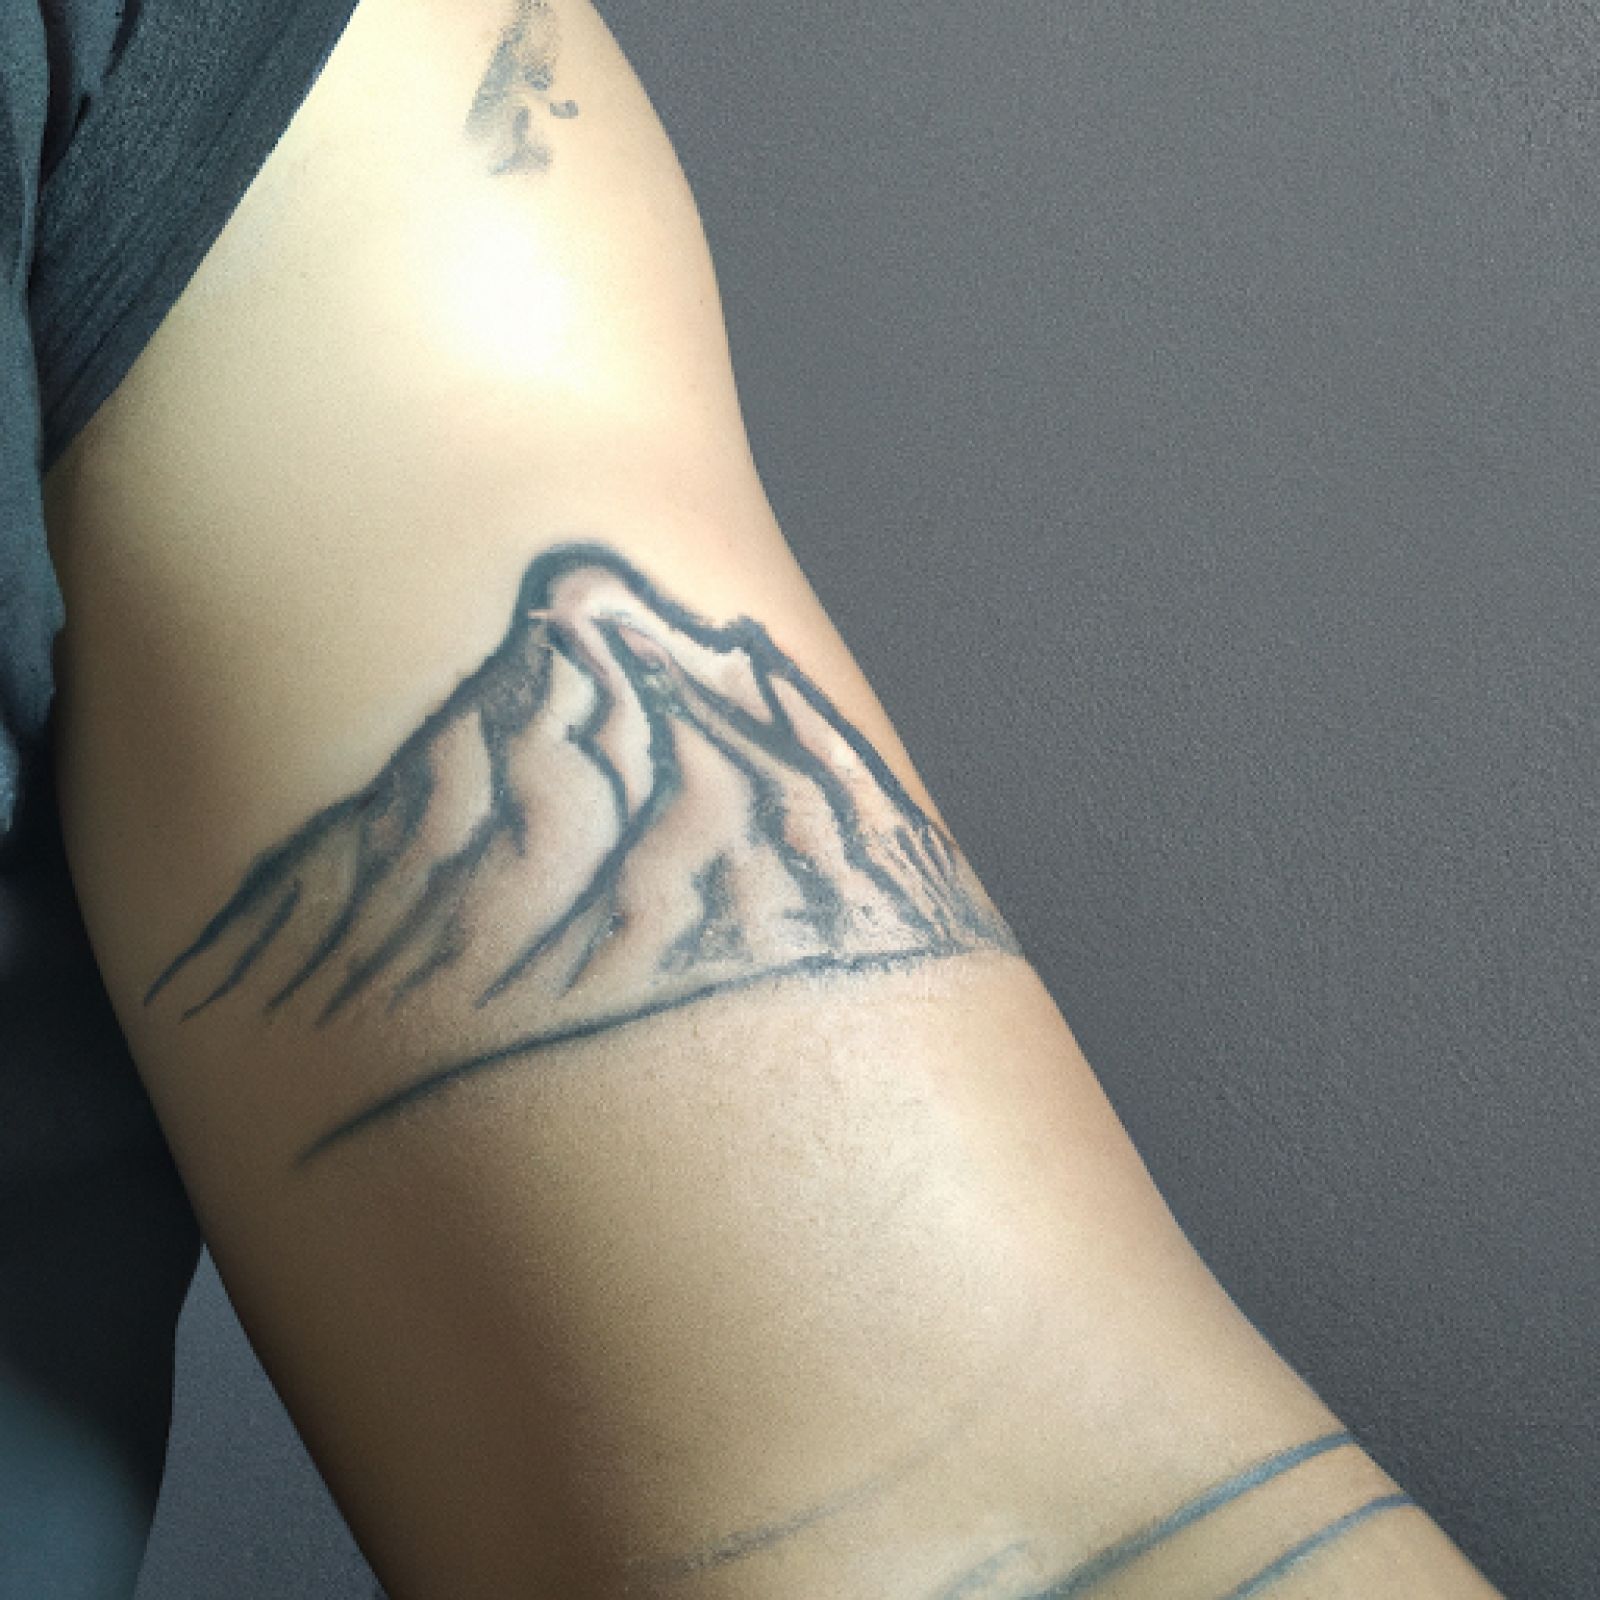 Mountain tattoo on arm for men